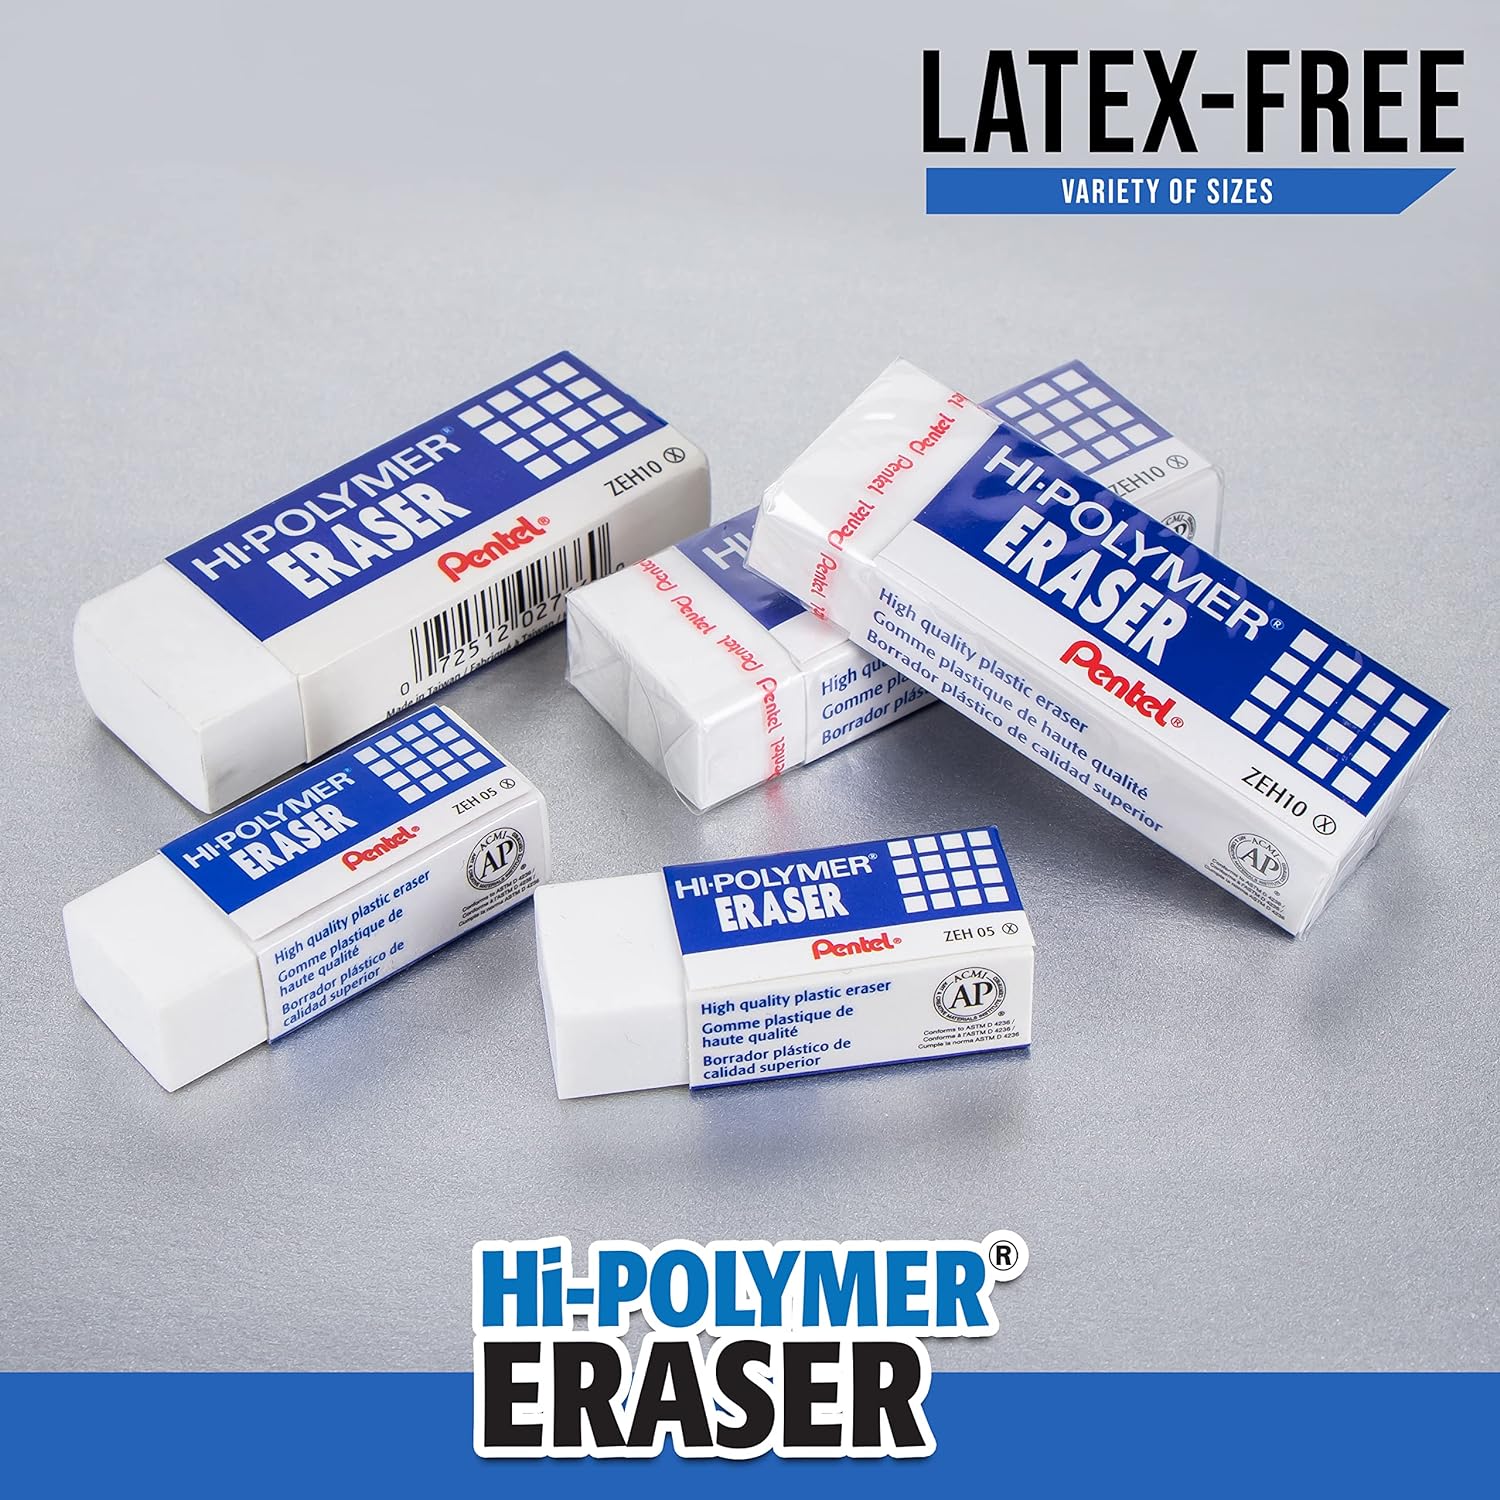 Pentel Hi-Polymer Block Eraser,Small,10 Pack Erasers